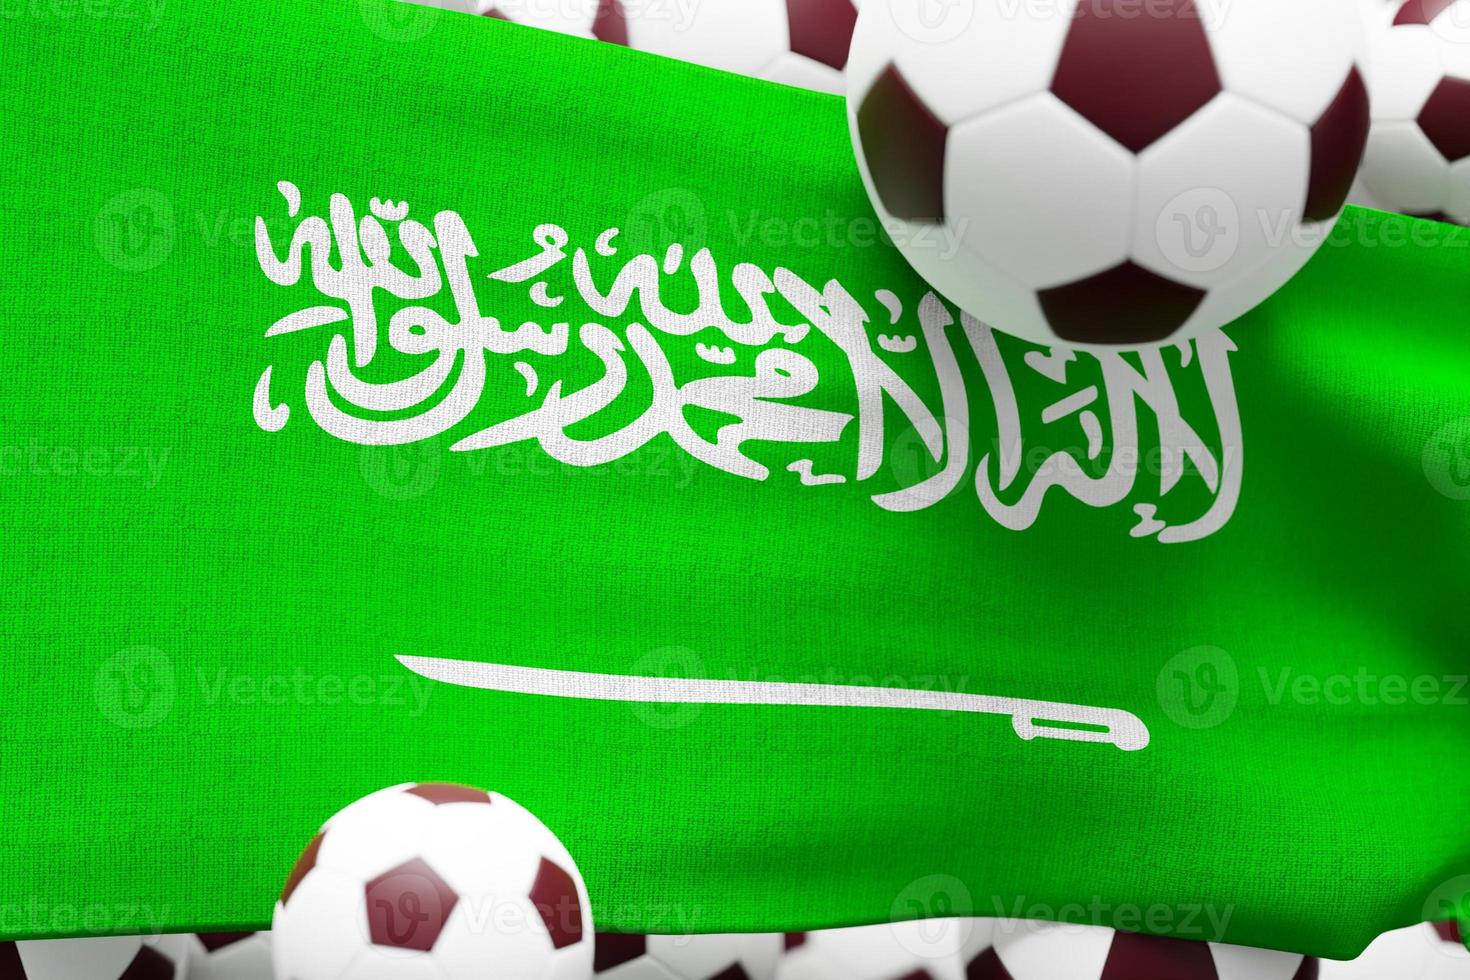 drapeau de l'arabie saoudite avec ballon. illustration de rendu 3d minimal de football 2022 photo